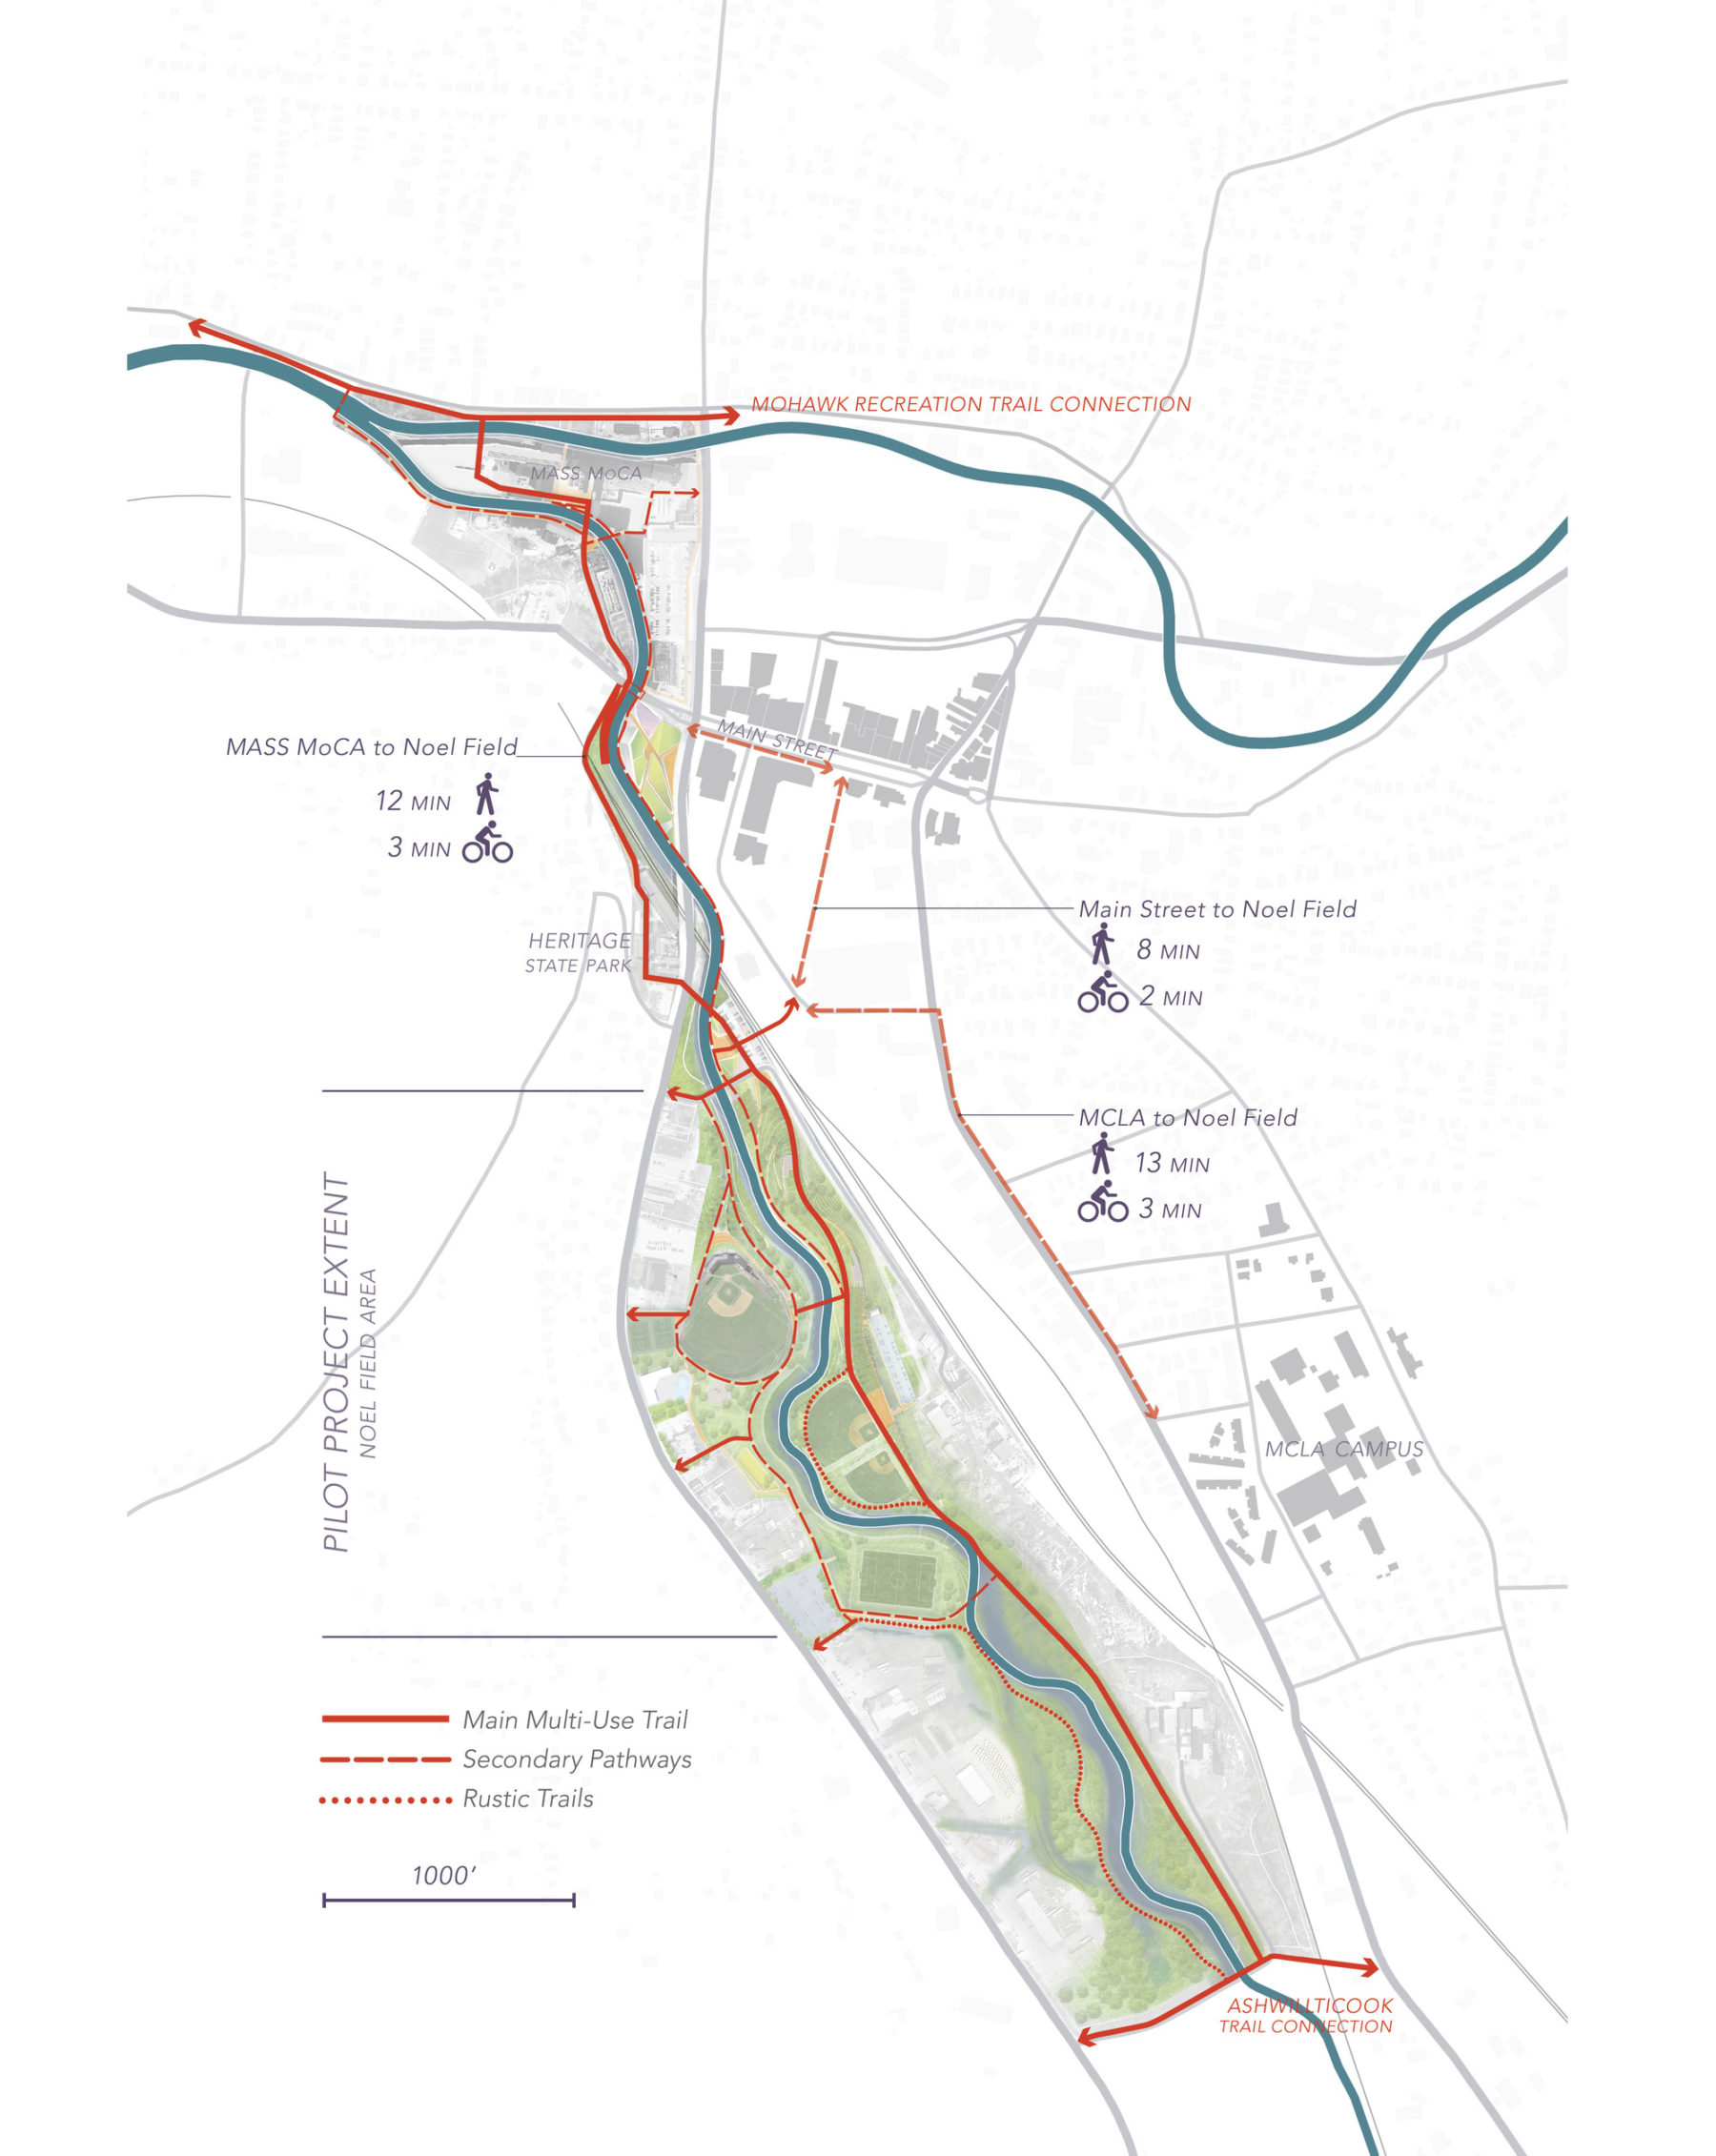 15 Inspirational Riverfront Development Case Studies 261